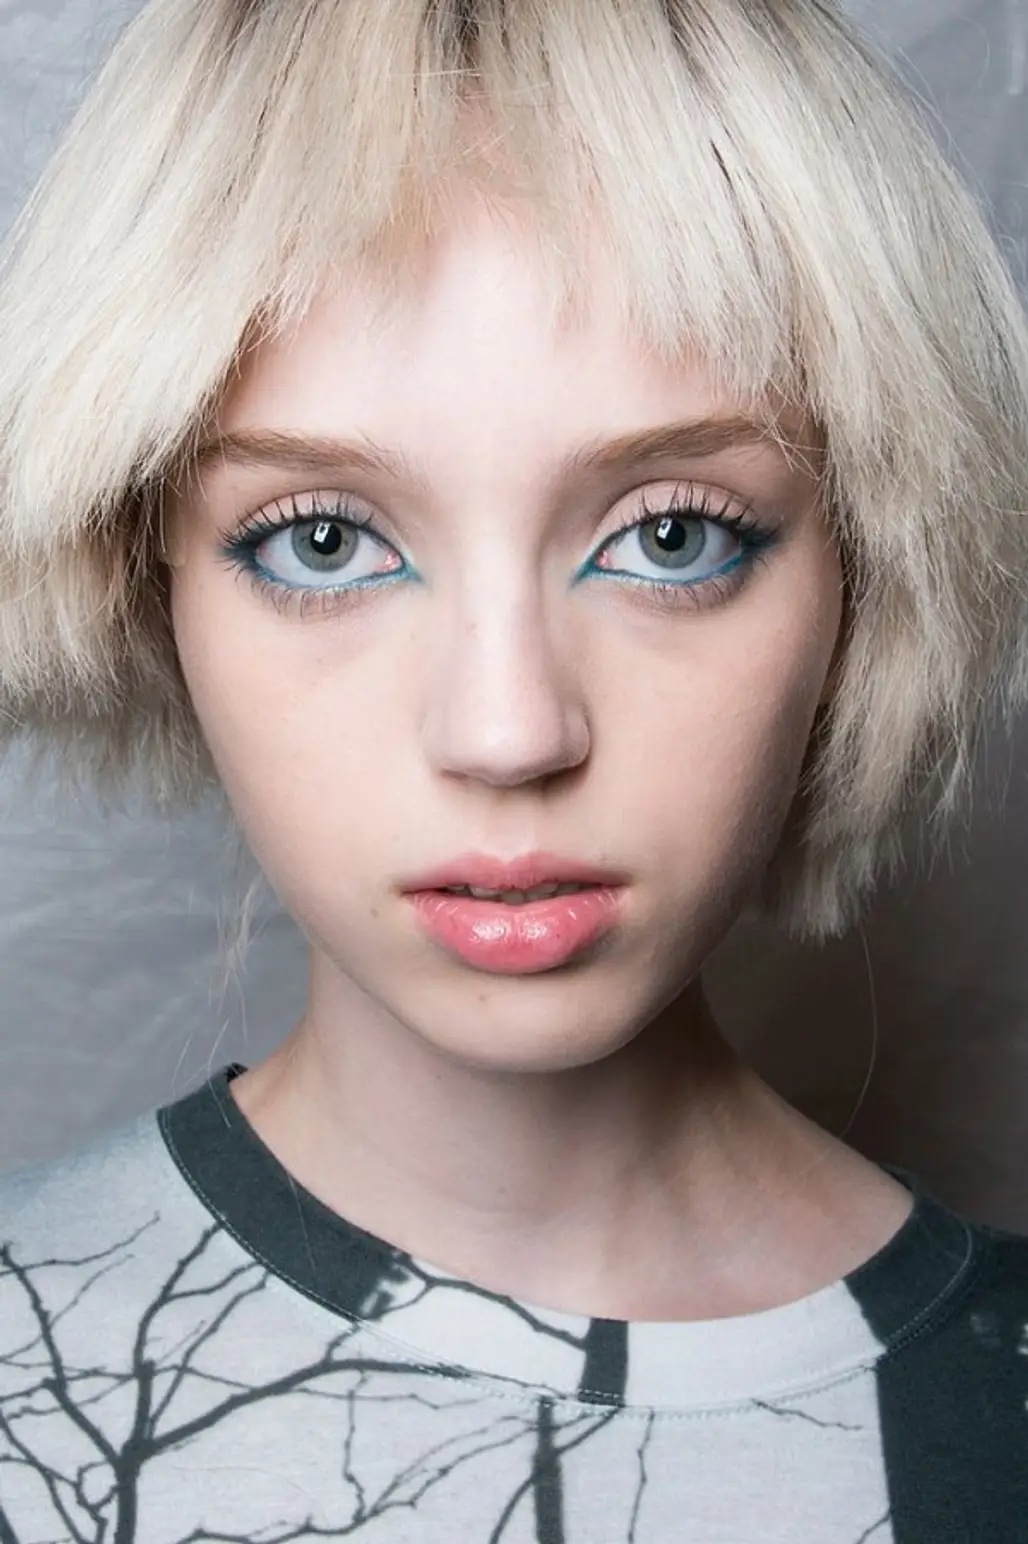 Blue Eye Makeup